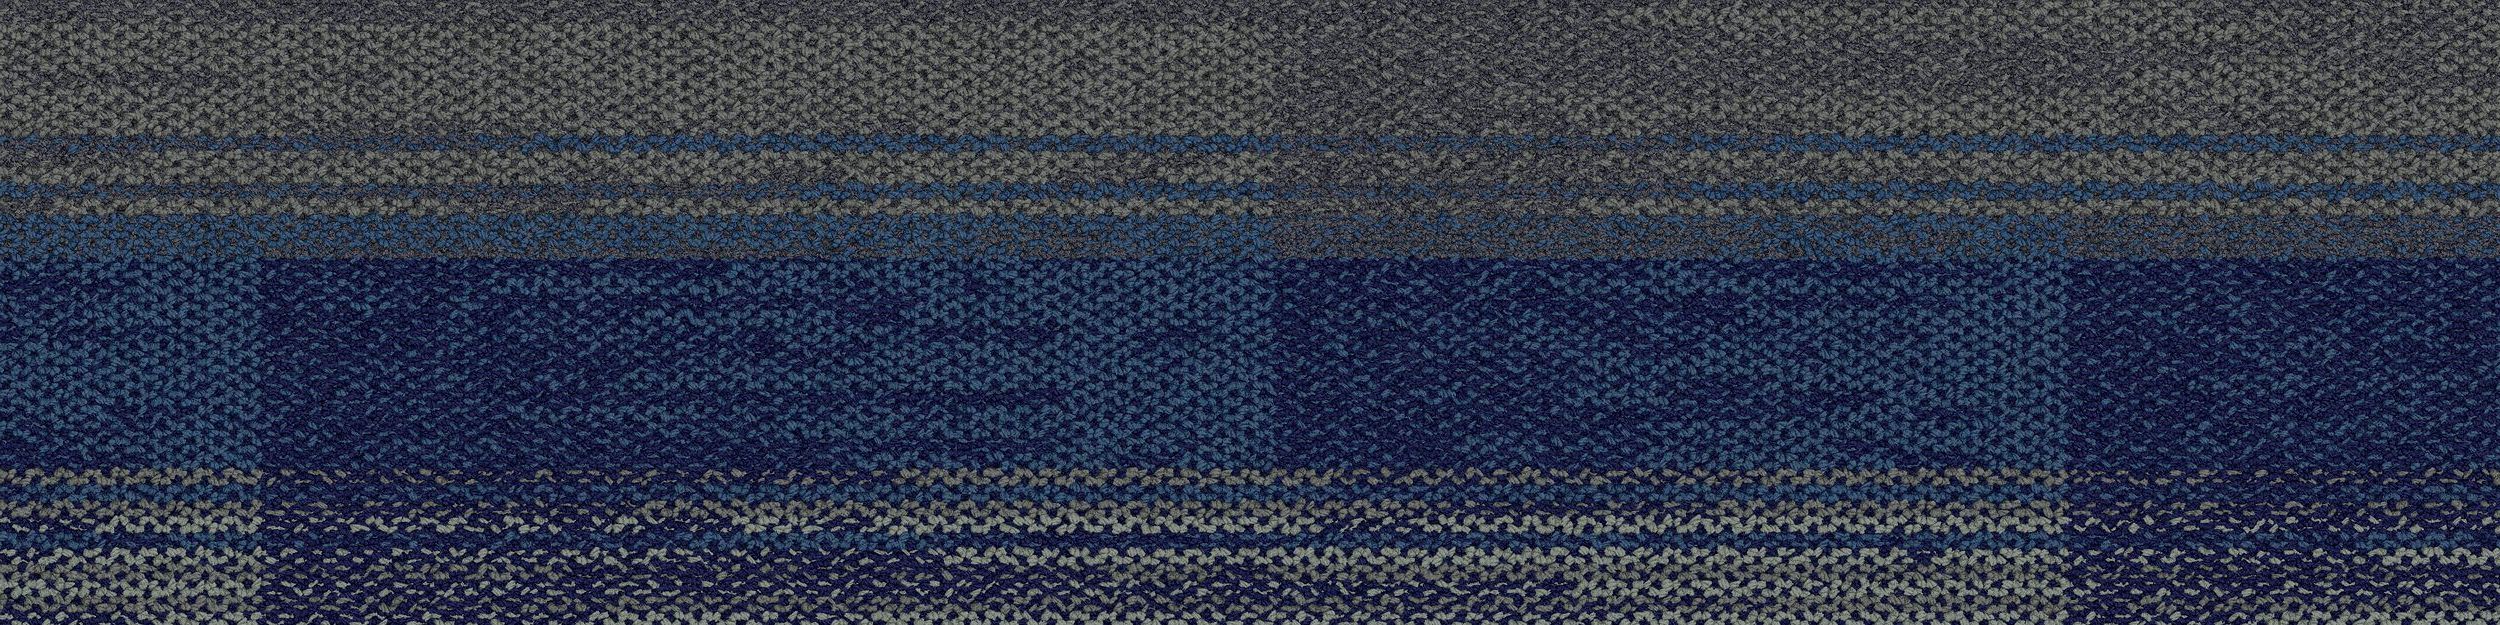 AE315 Carpet Tile In Granite/Azure image number 2